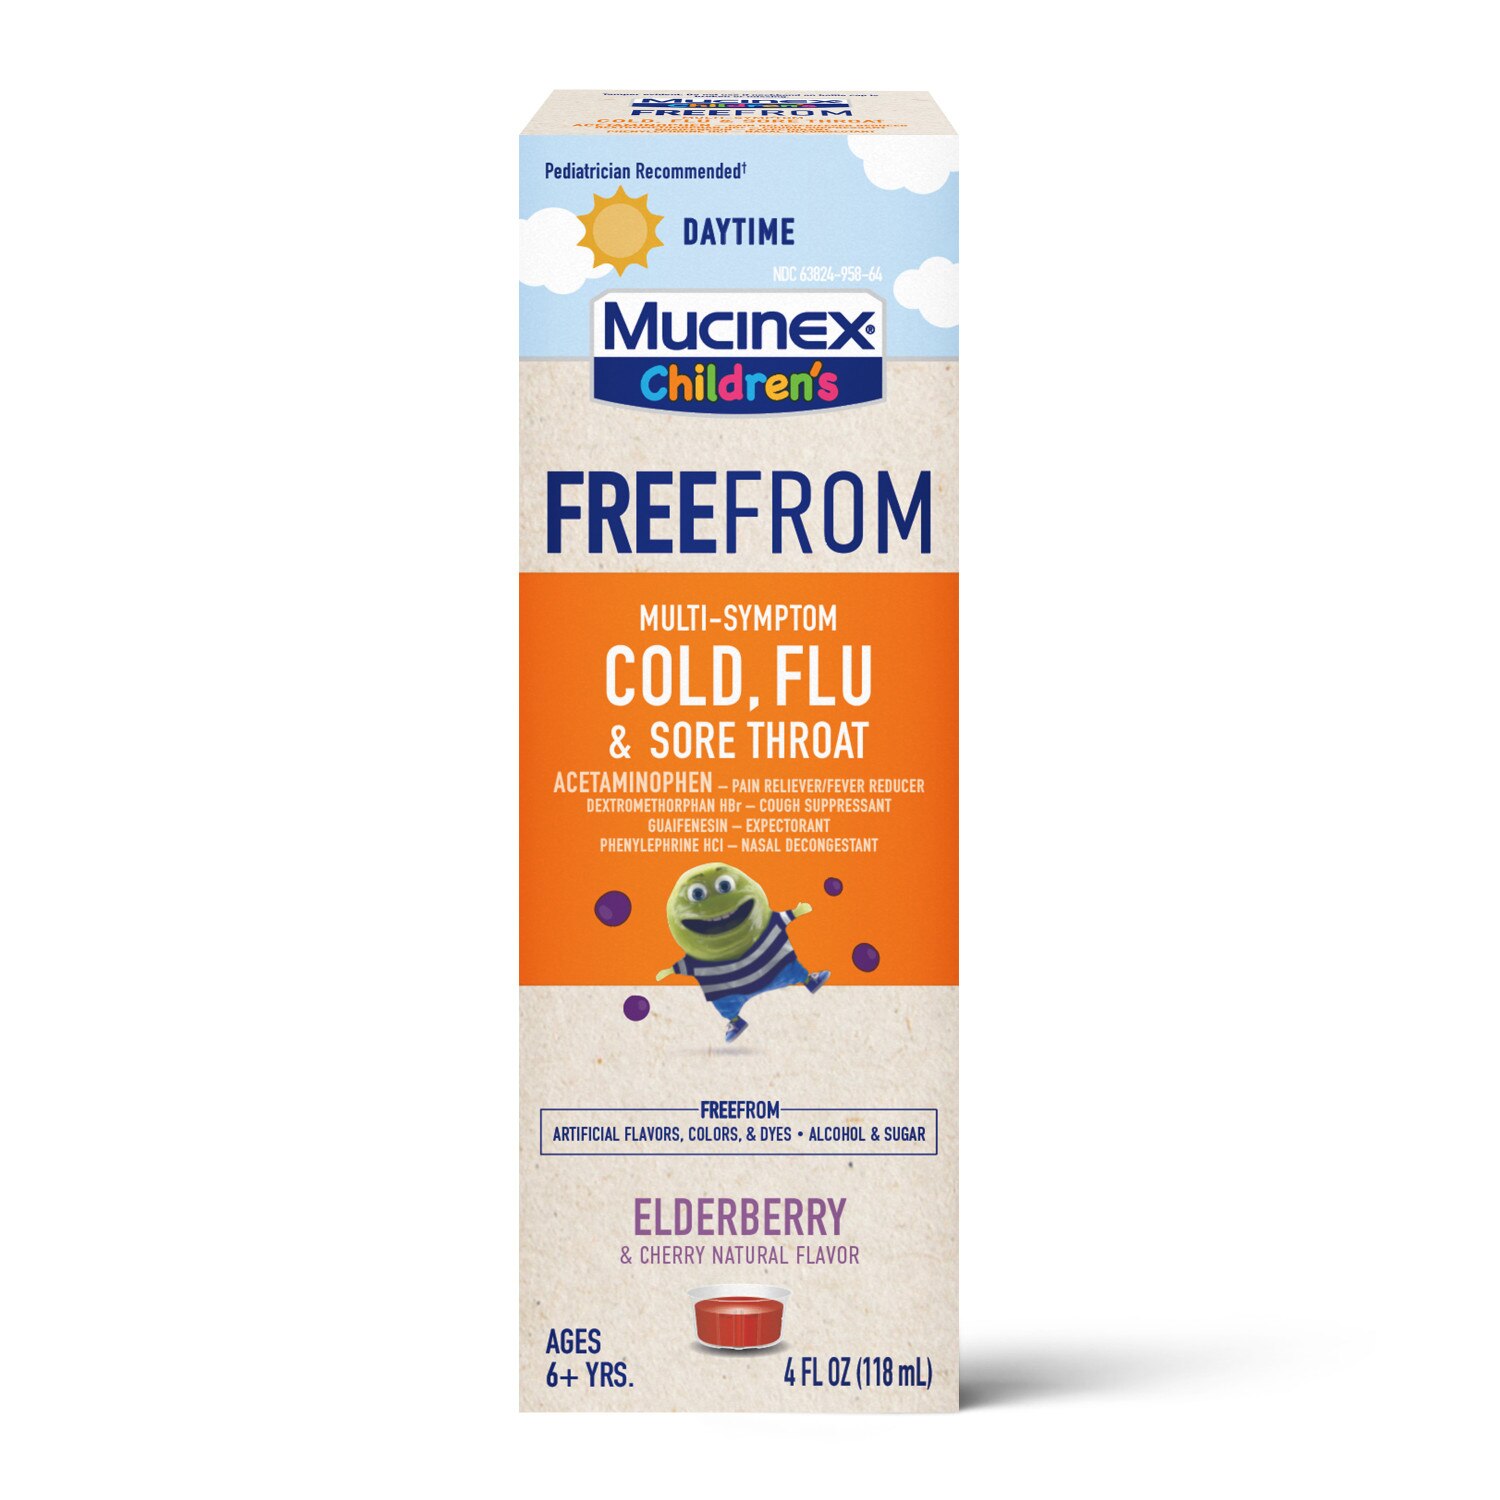 mucinex-children-s-freefrom-multi-symptom-cold-flu-sore-throat